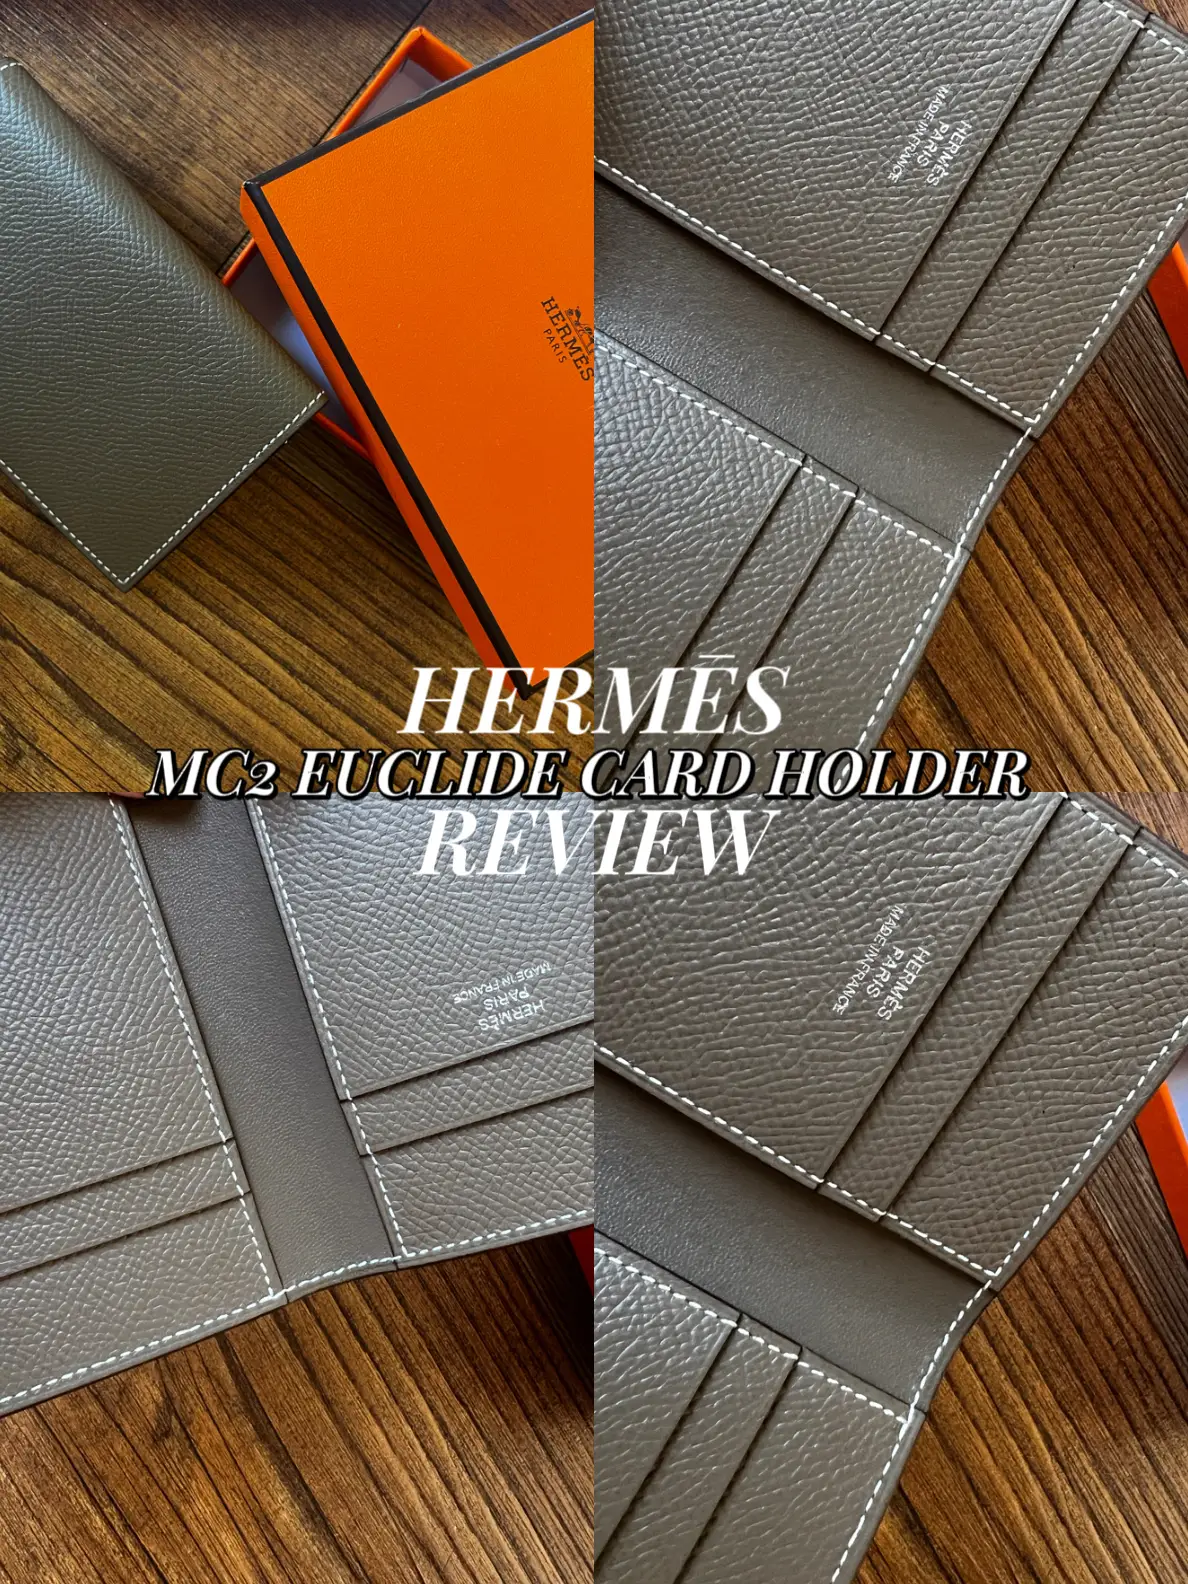 Hermes MC2 Euclide Card Holder